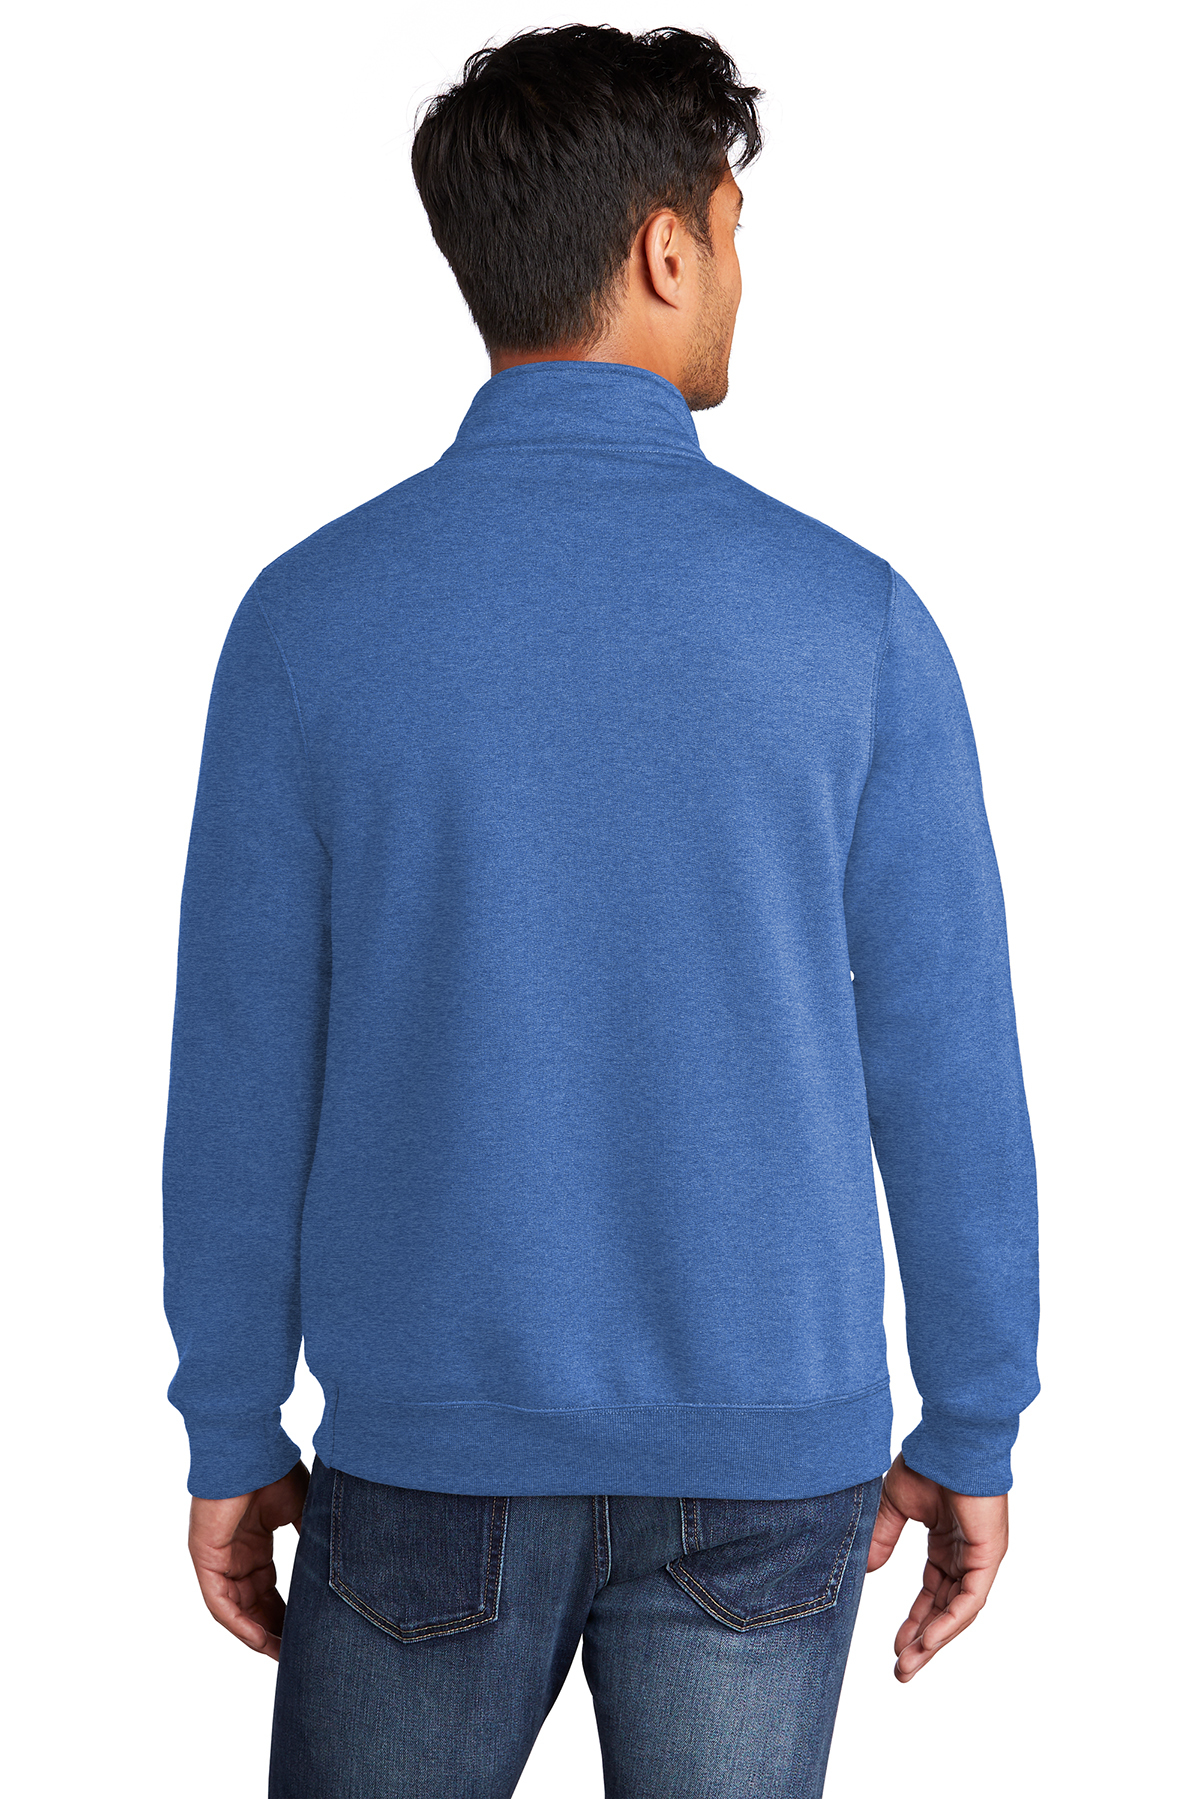 Port & Company Tall Core Fleece Pullover Hooded Sweatshirt, Product